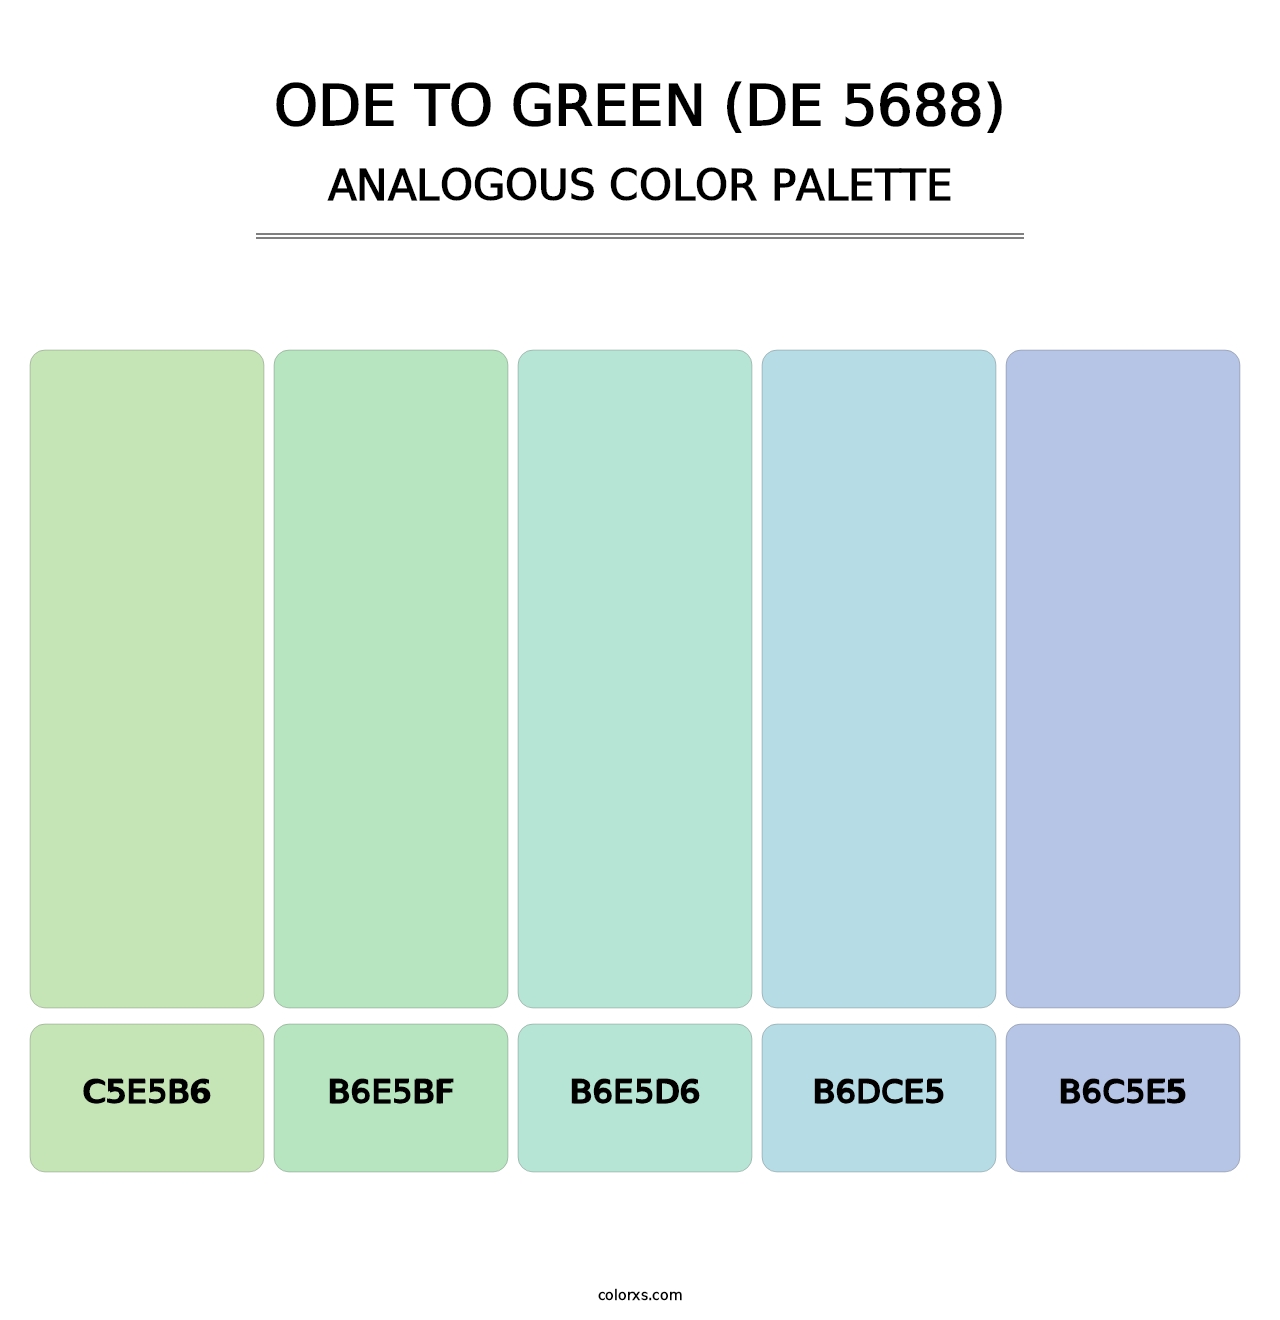 Ode to Green (DE 5688) - Analogous Color Palette